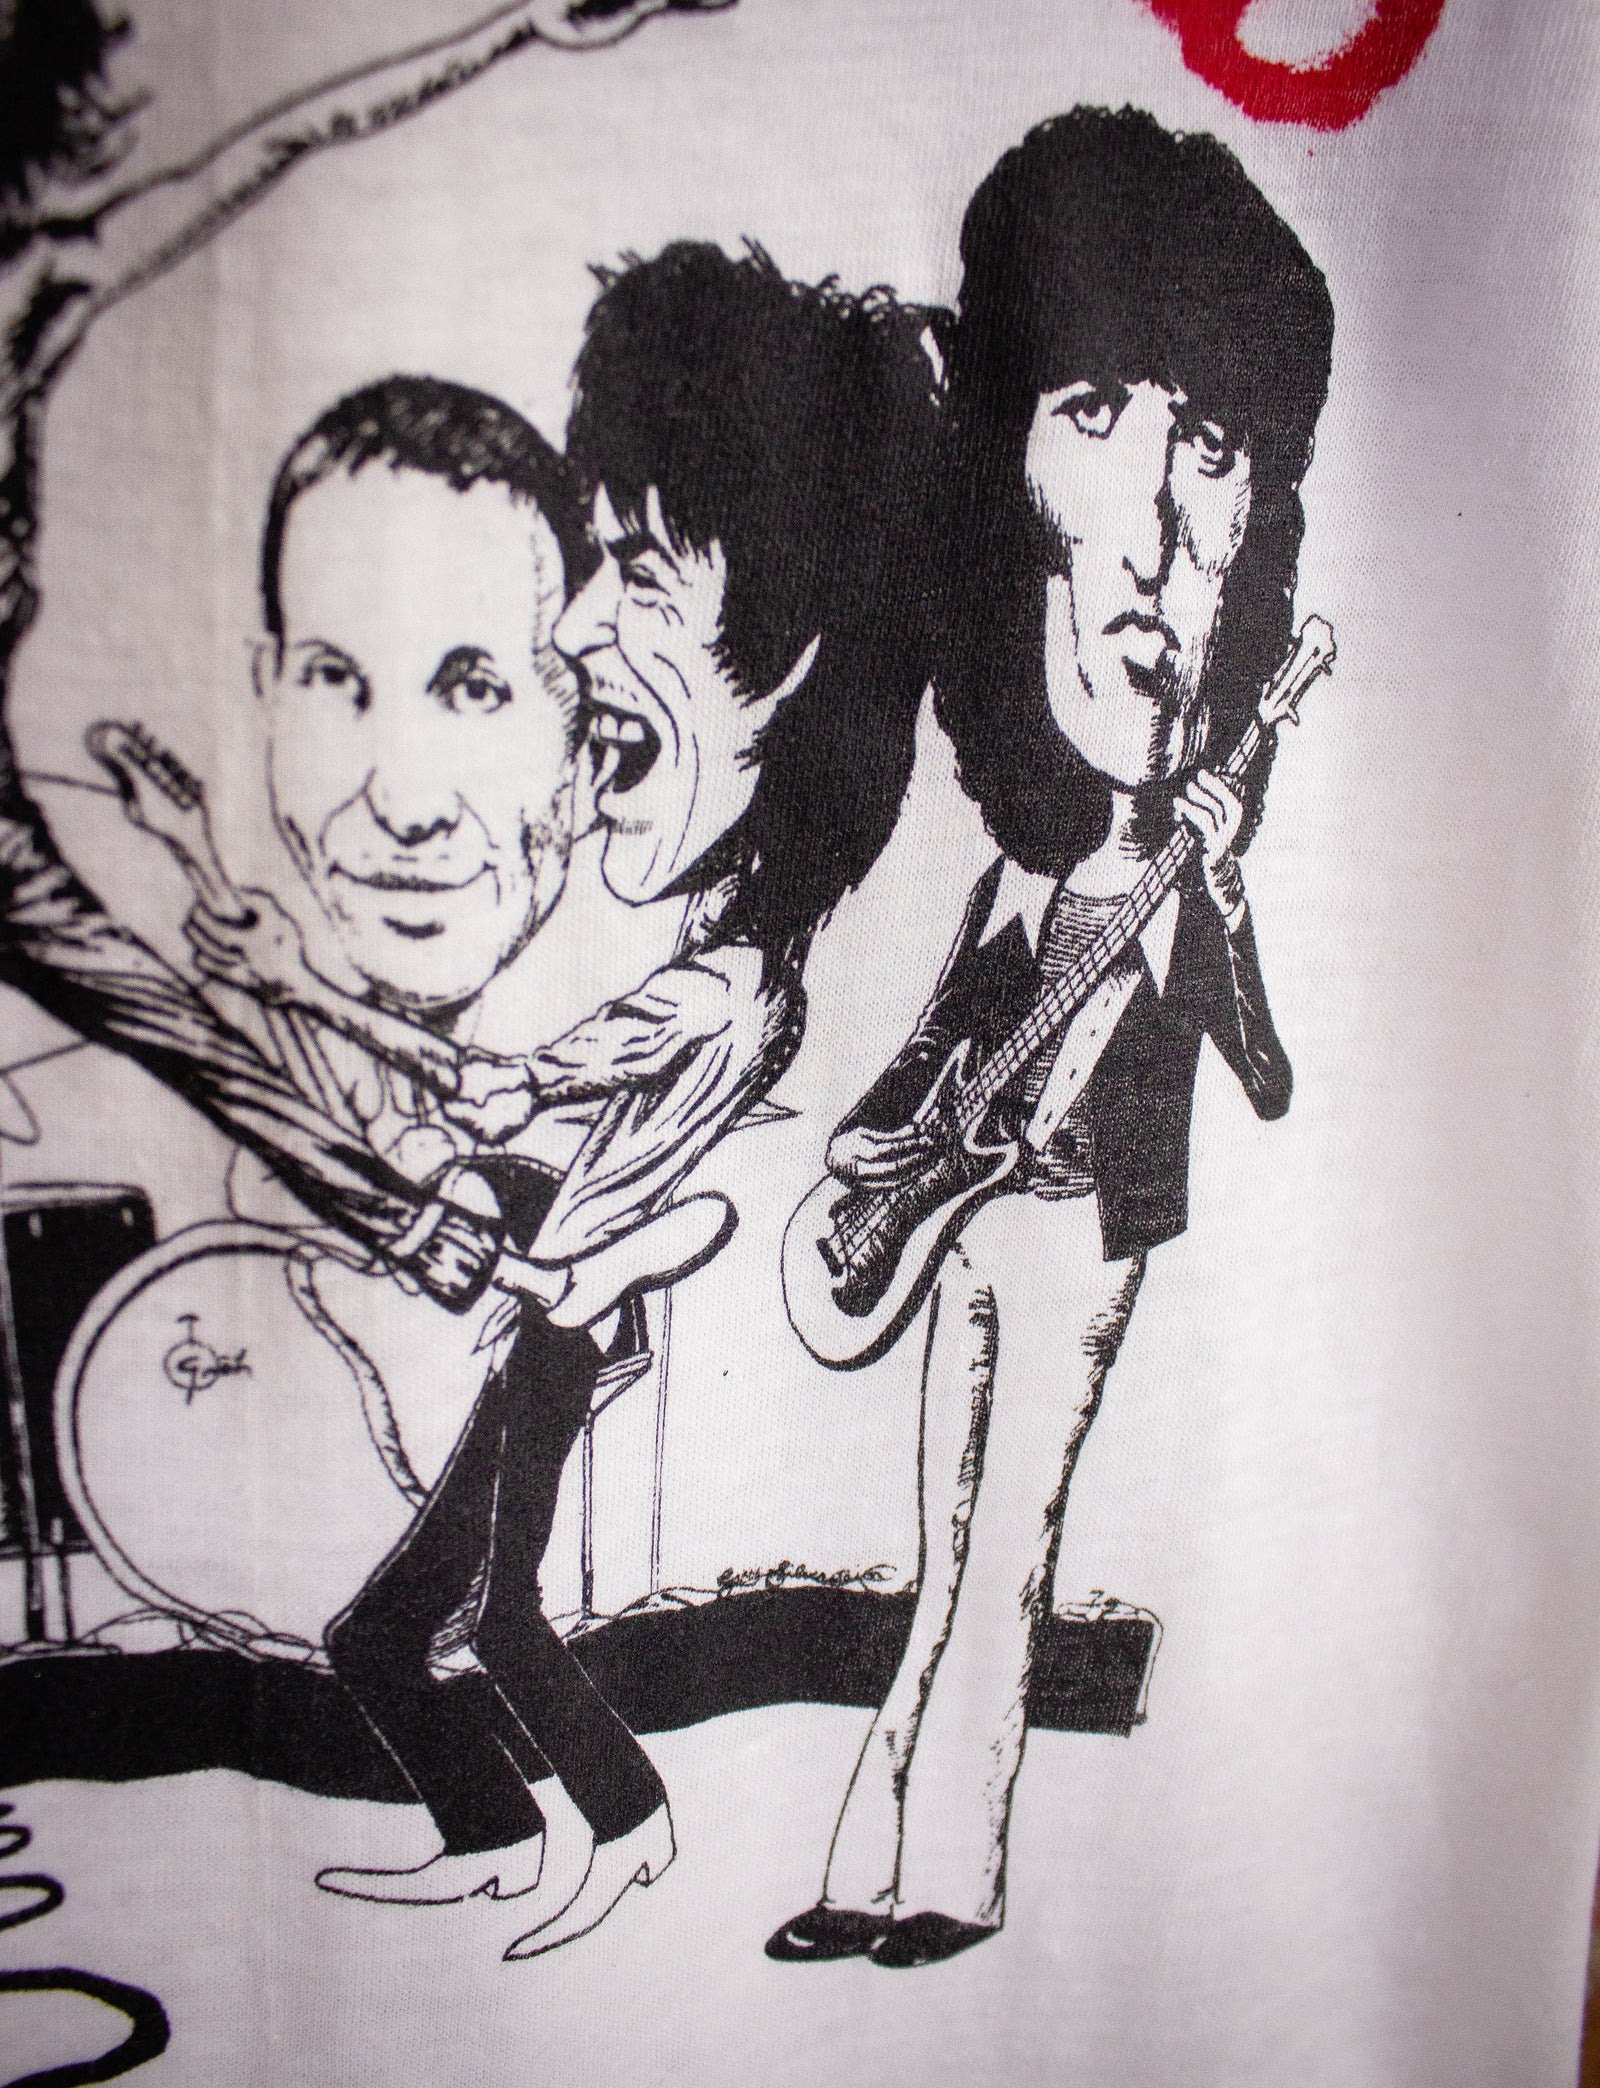 Vintage Rolling Stones Caricature Ringer Concert T Shirt 1978 White/Red Medium